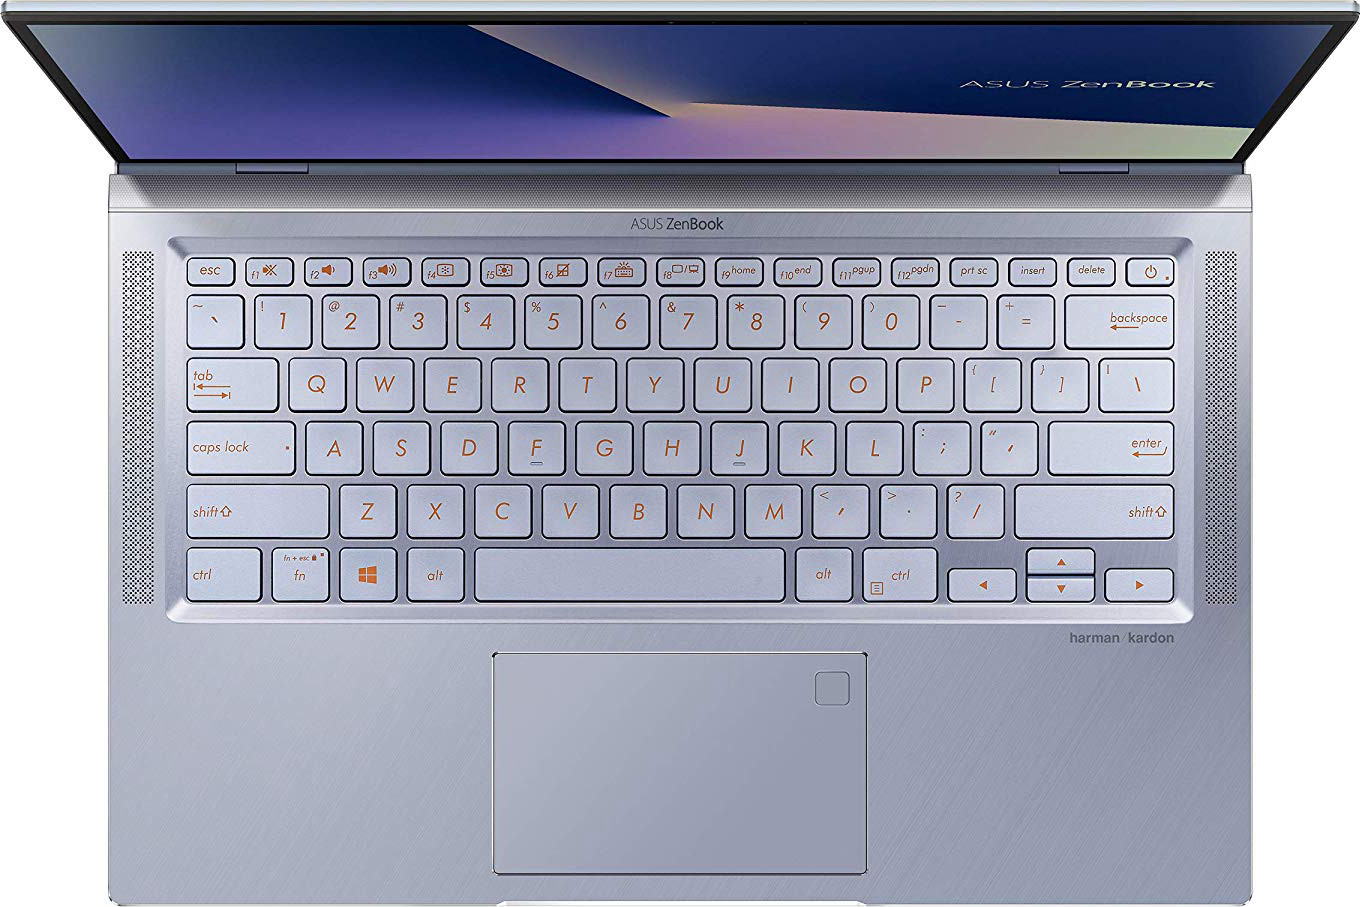 ASUS ZenBook 14 Ultra Thin & Light Laptop, 4-Way NanoEdge 14” Full HD, Intel Core i7-8565U, 8GB DDR4 RAM, 512GB NVMe PCIe SSD, Wi-Fi 5, Windows 10, Silver Blue, UX431FA-ES74